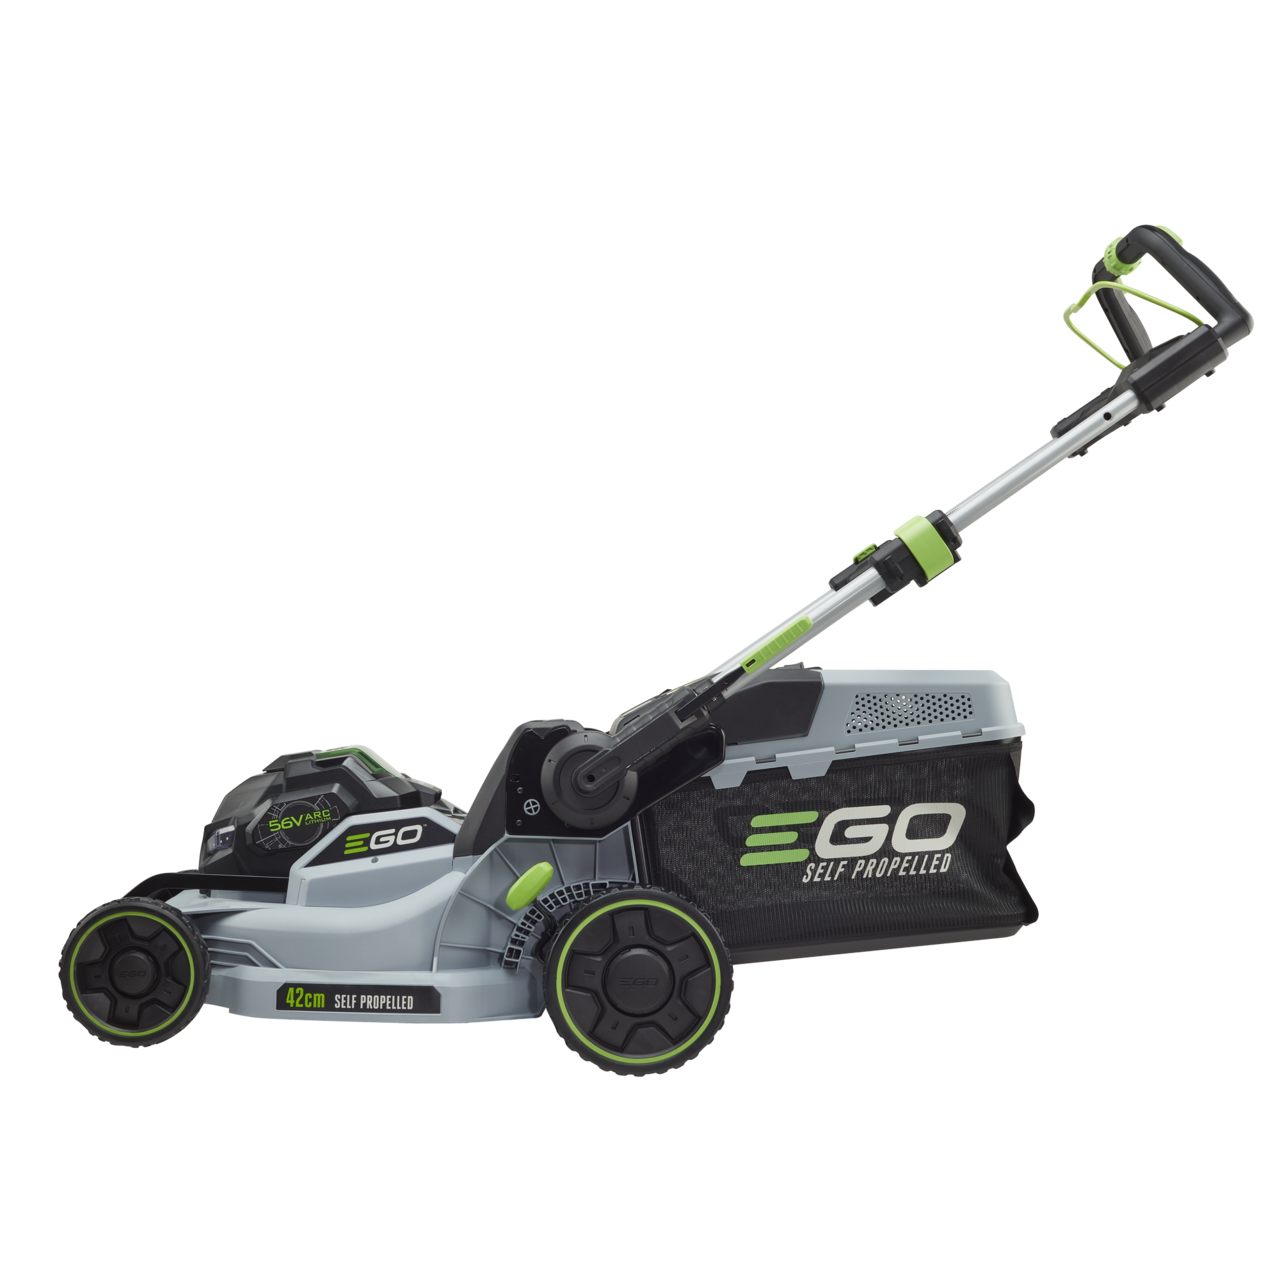 EGO LM1702E-SP Cordless Lawn Mower 42cm